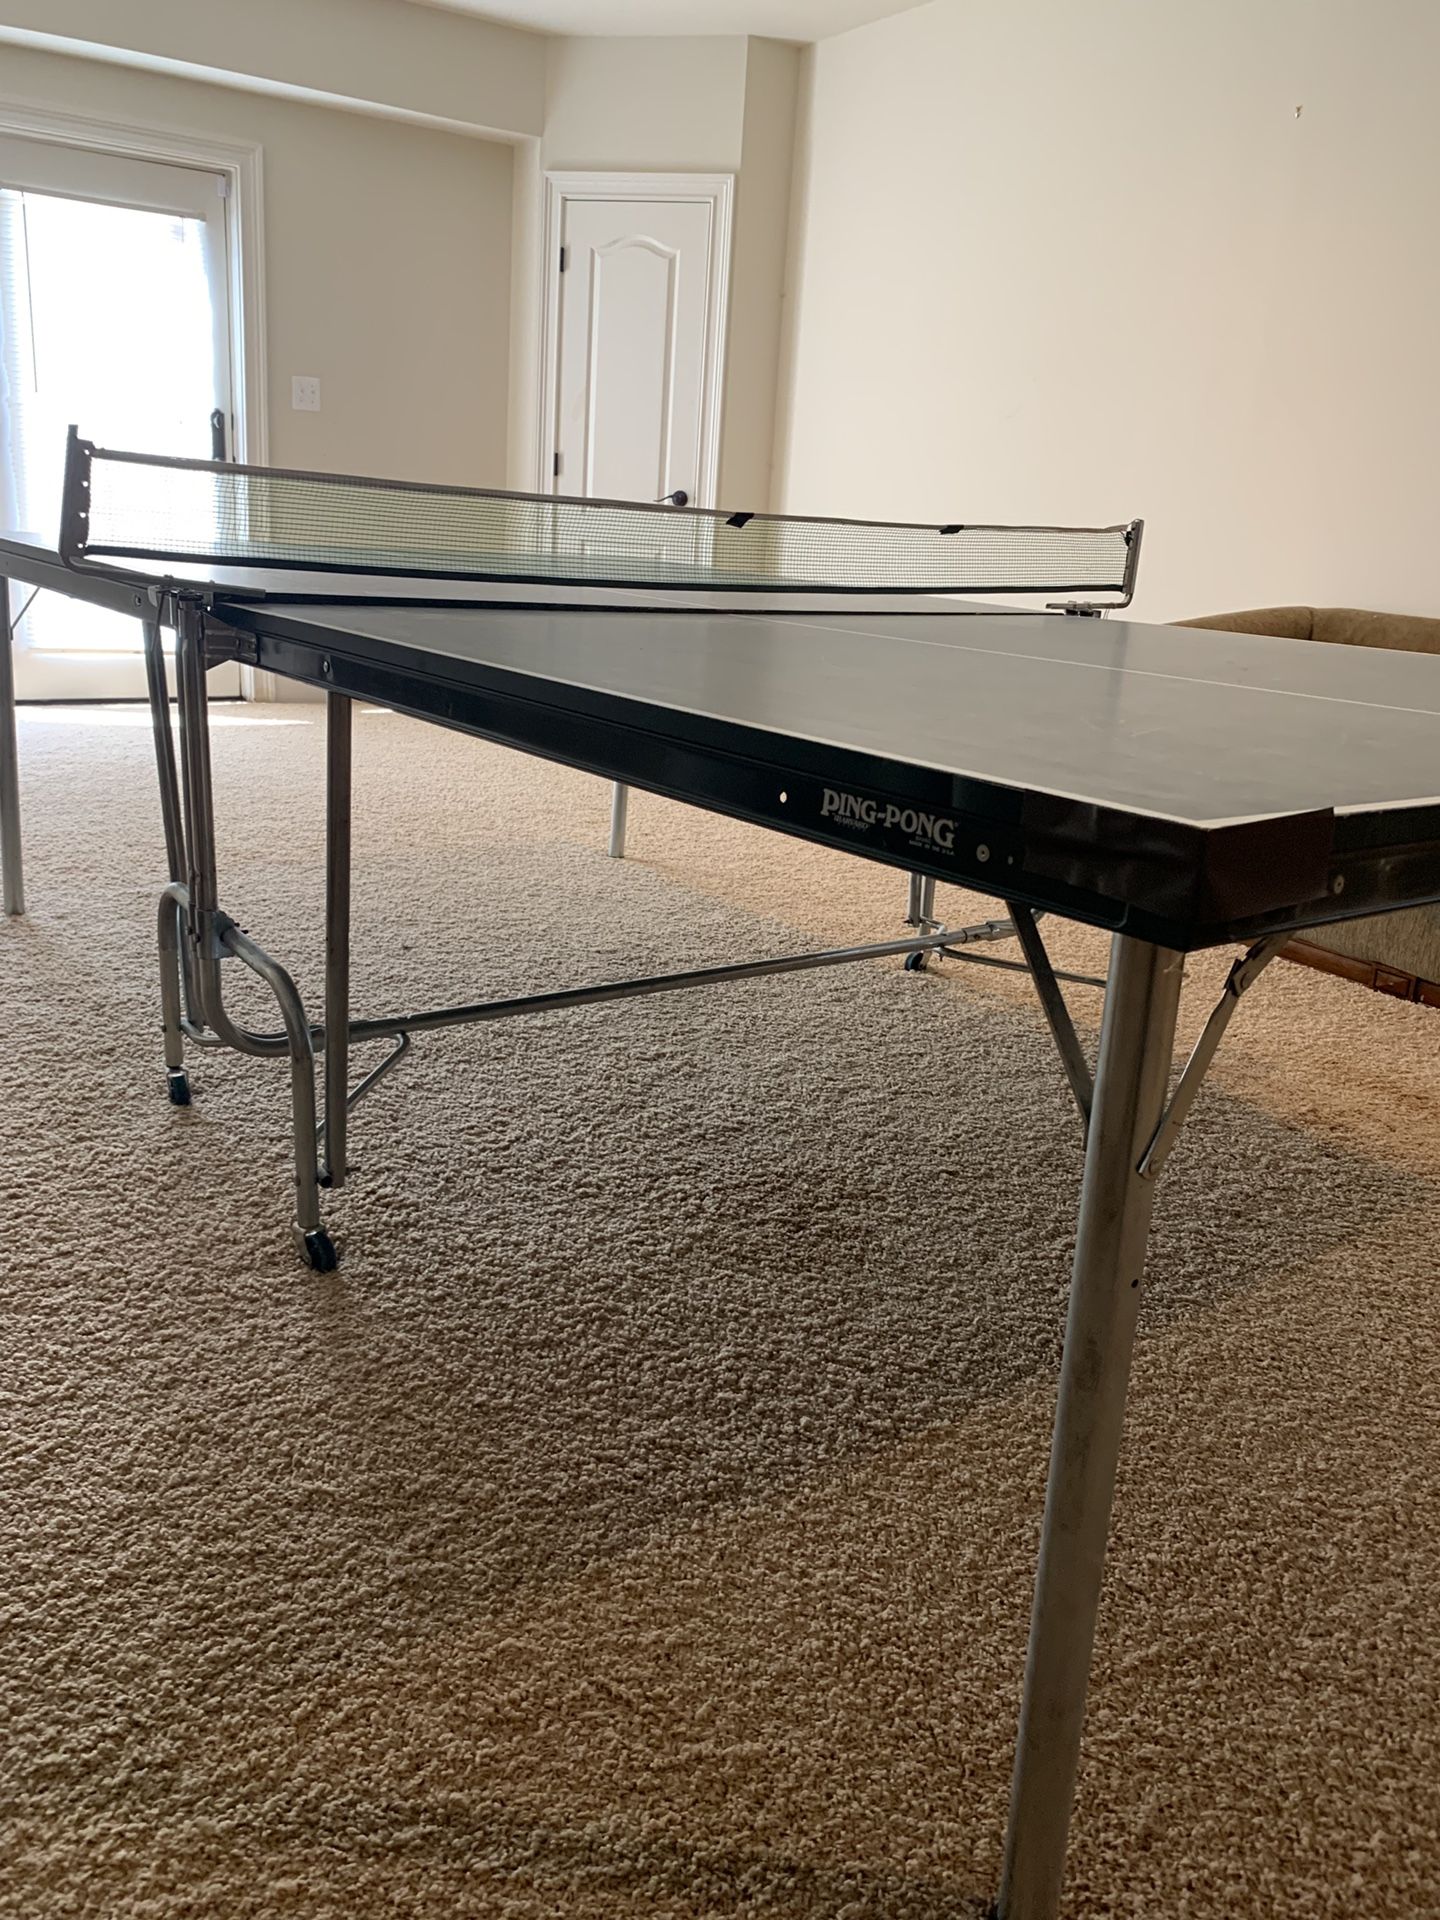 9’ X 5’ ping pong table